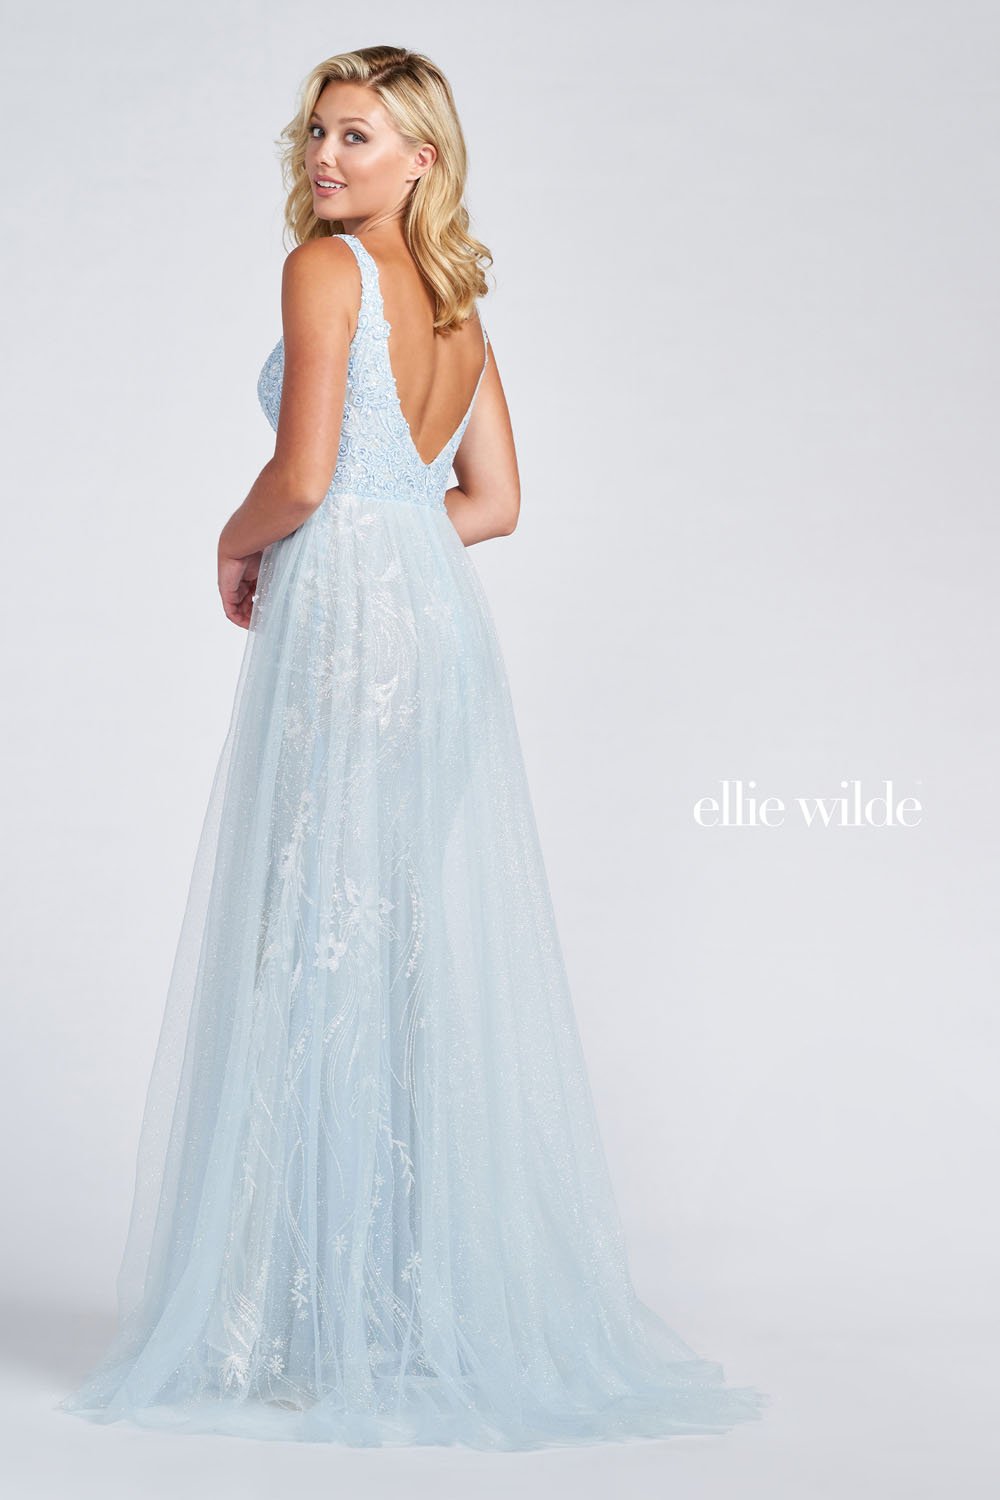 Ellie Wilde Ice Blue EW122054 Prom Dress Image.  Ice Blue formal dress.